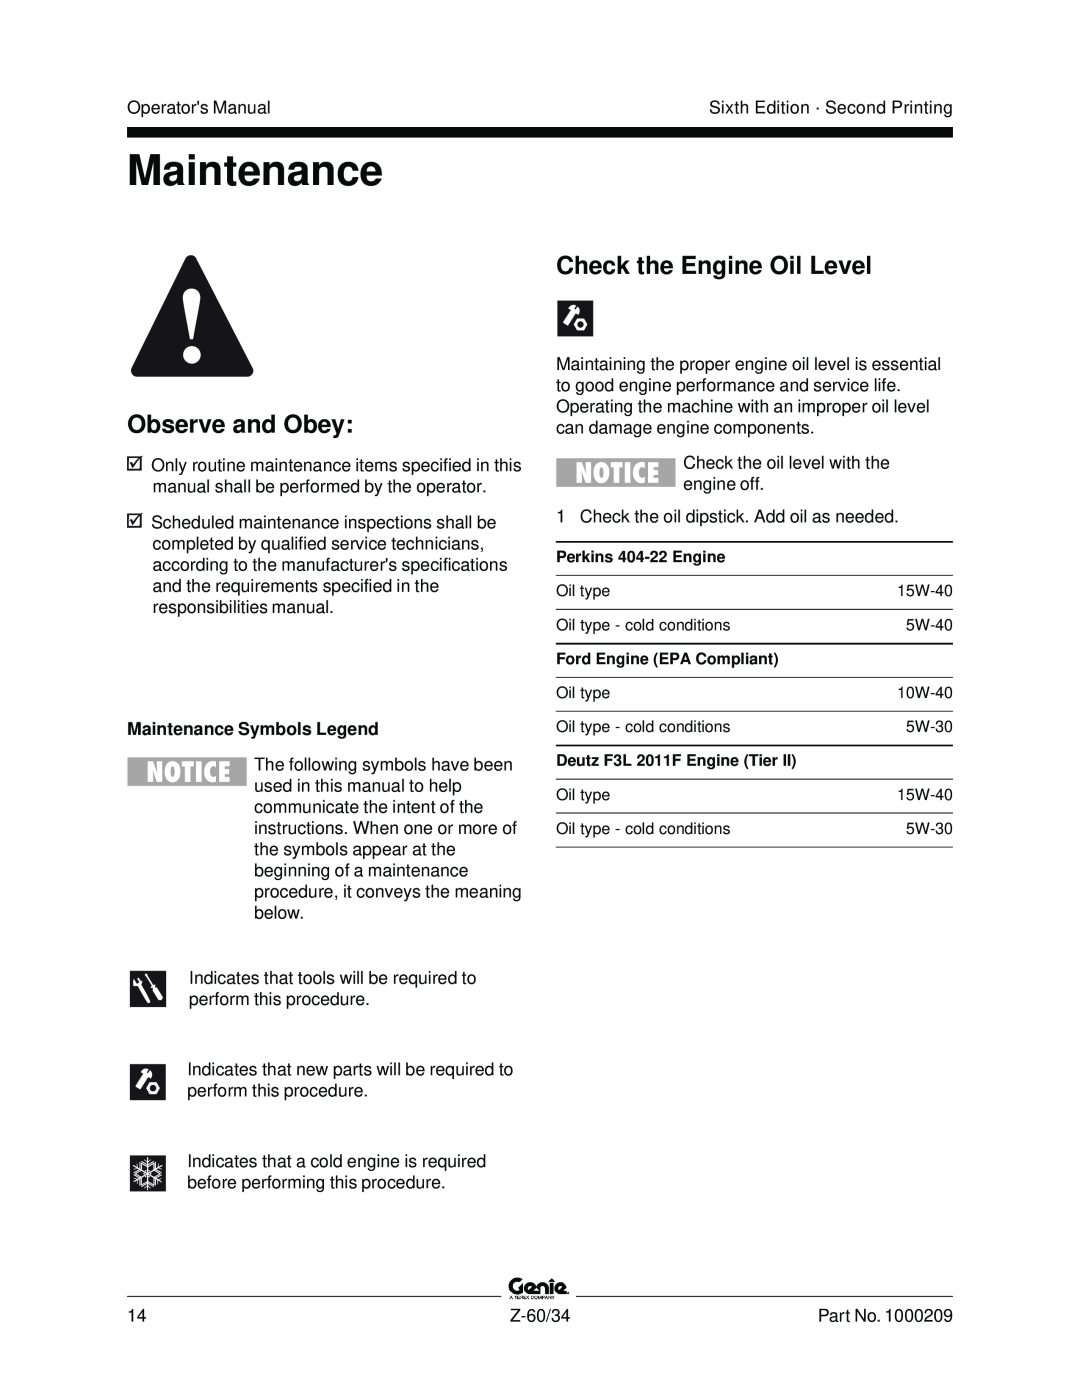 Genie Z-60, Z-34 manual Observe and Obey, Check the Engine Oil Level, Maintenance Symbols Legend 